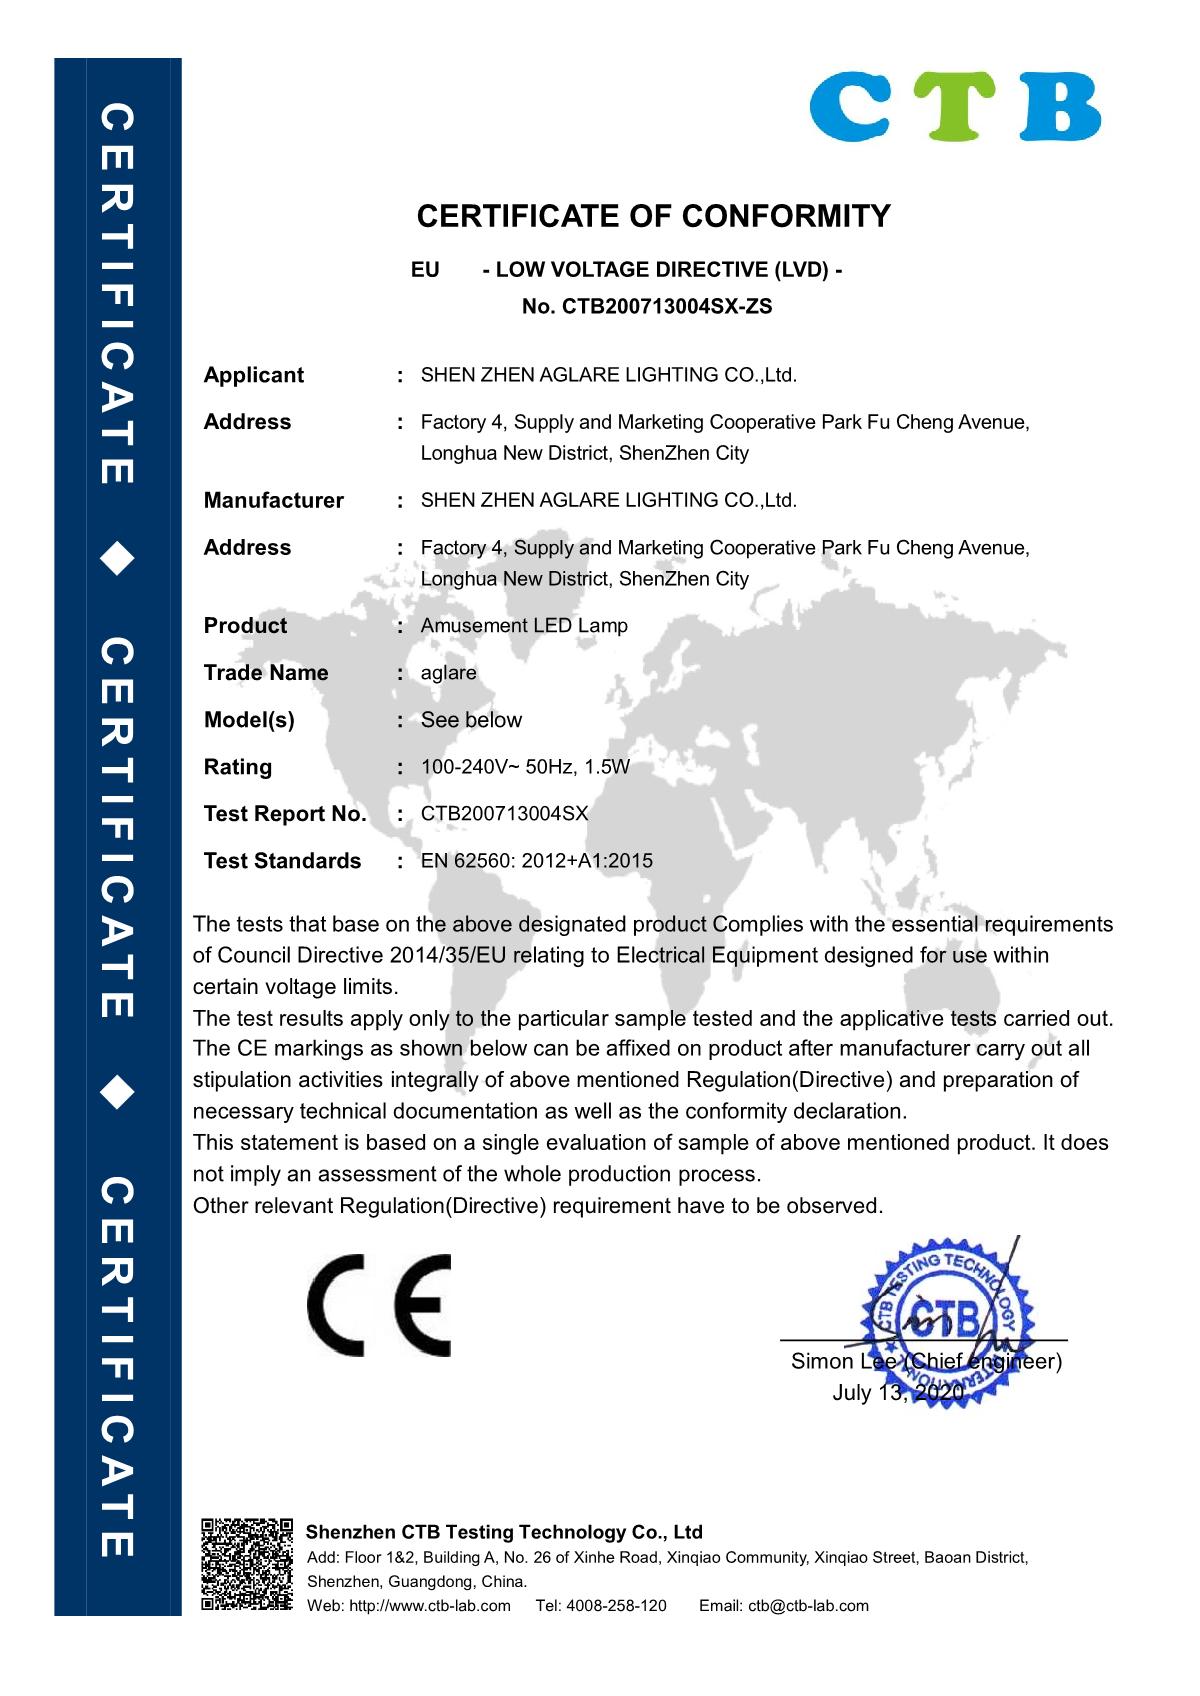 Aglare Lighting Amusement LED Lamp-CE -LVD certificate